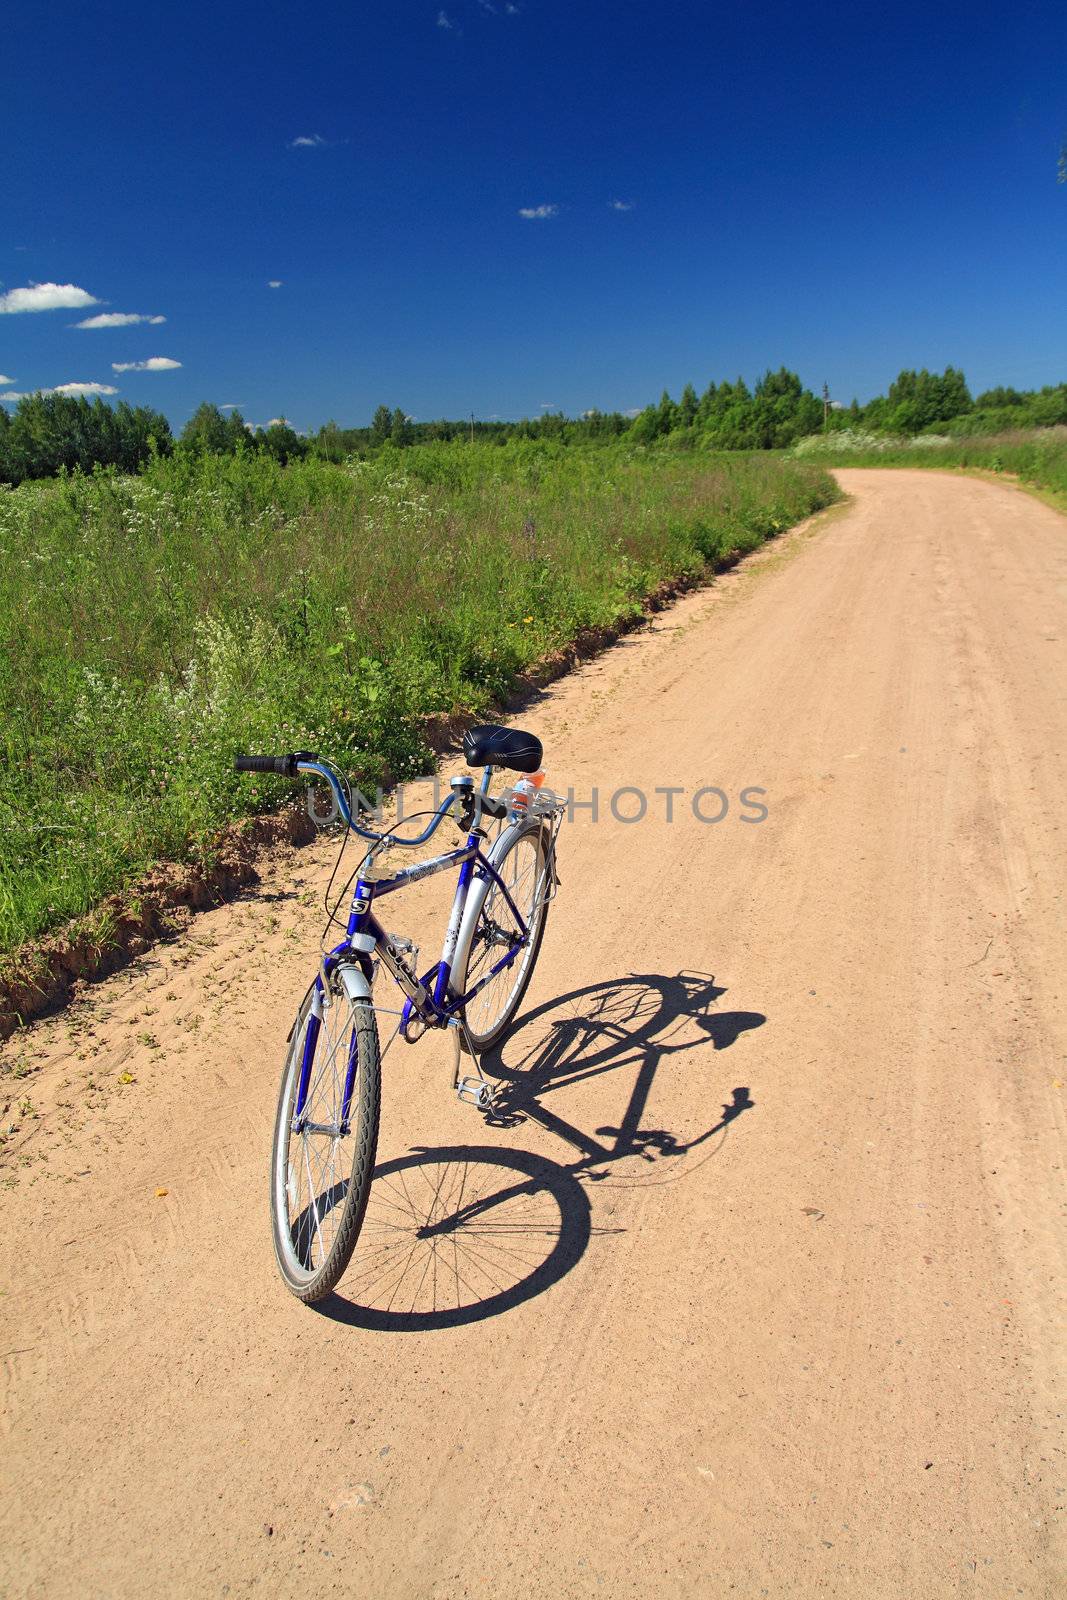 bicycle on sandy rural road by basel101658